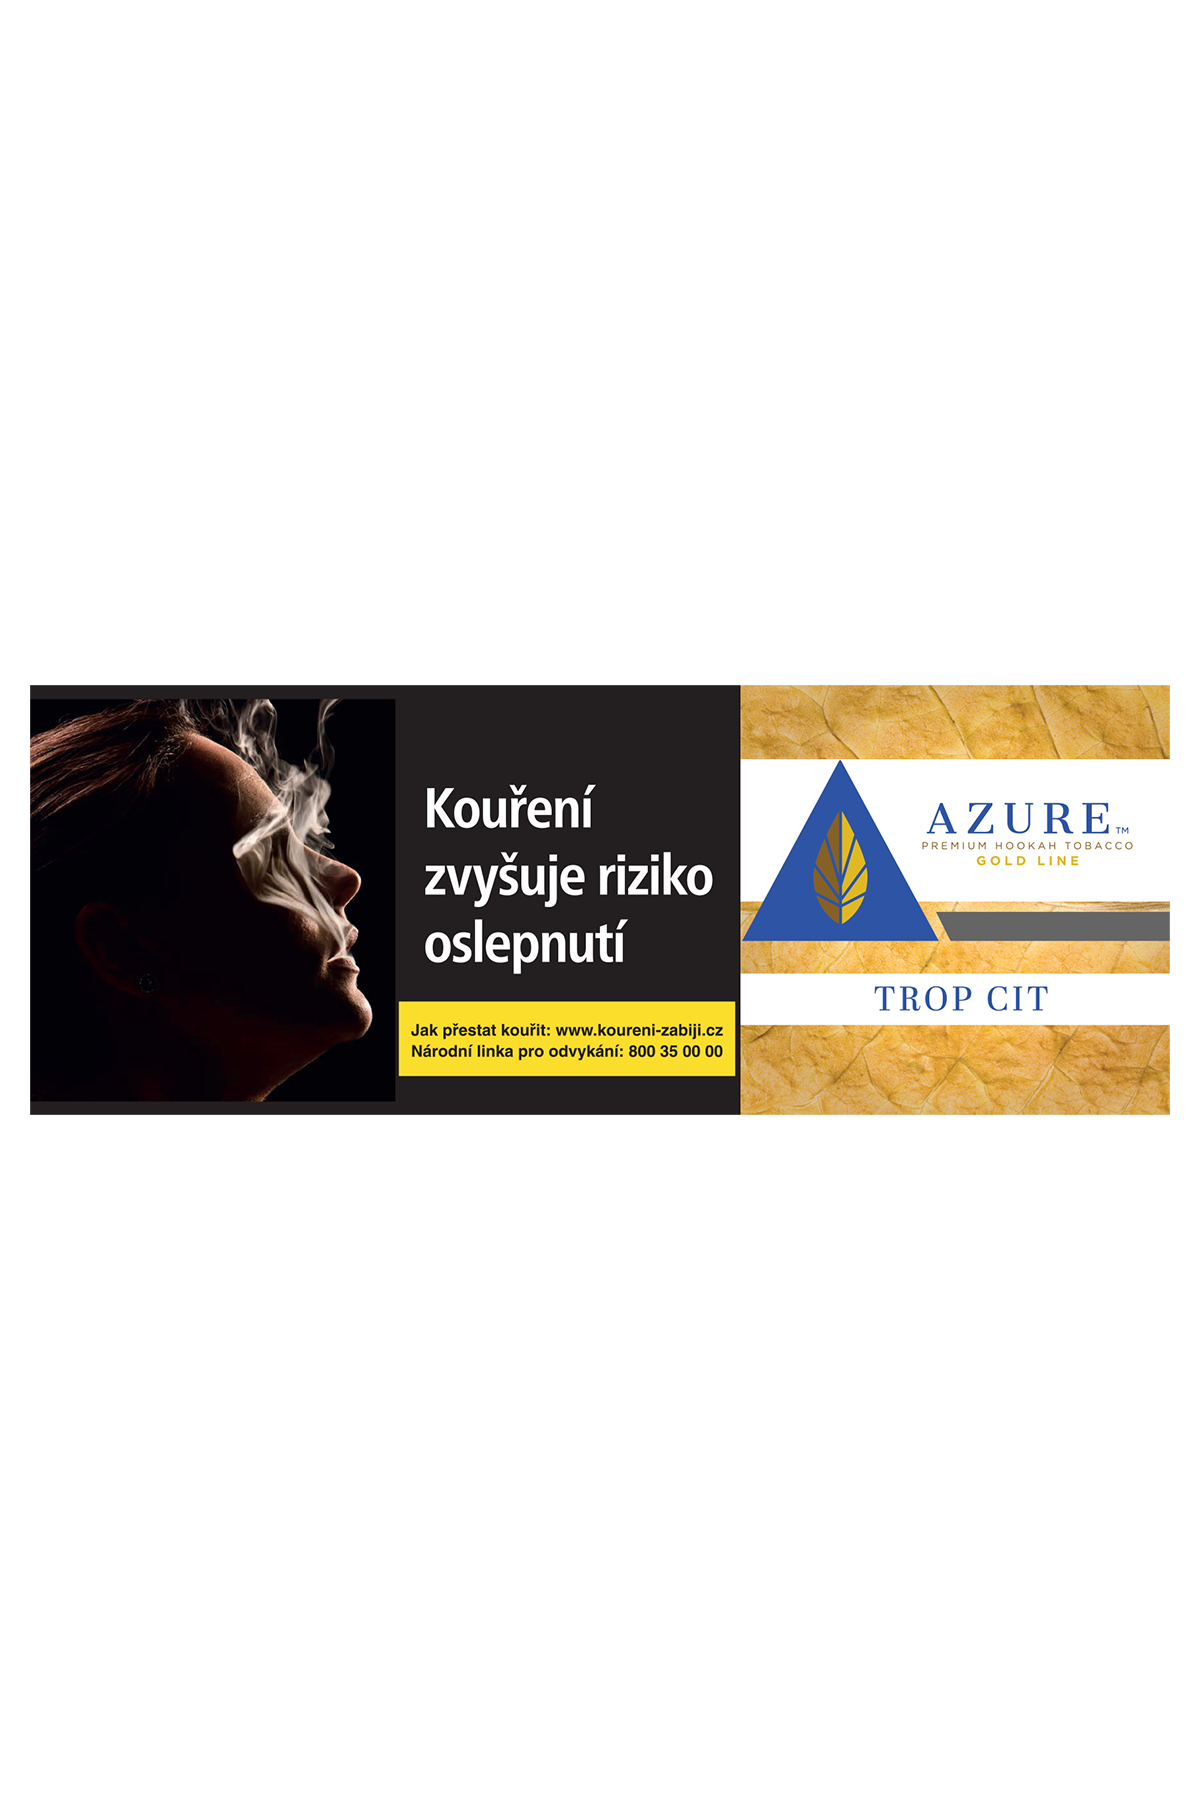 Tabák - Azure Gold 250g - Trop Cit